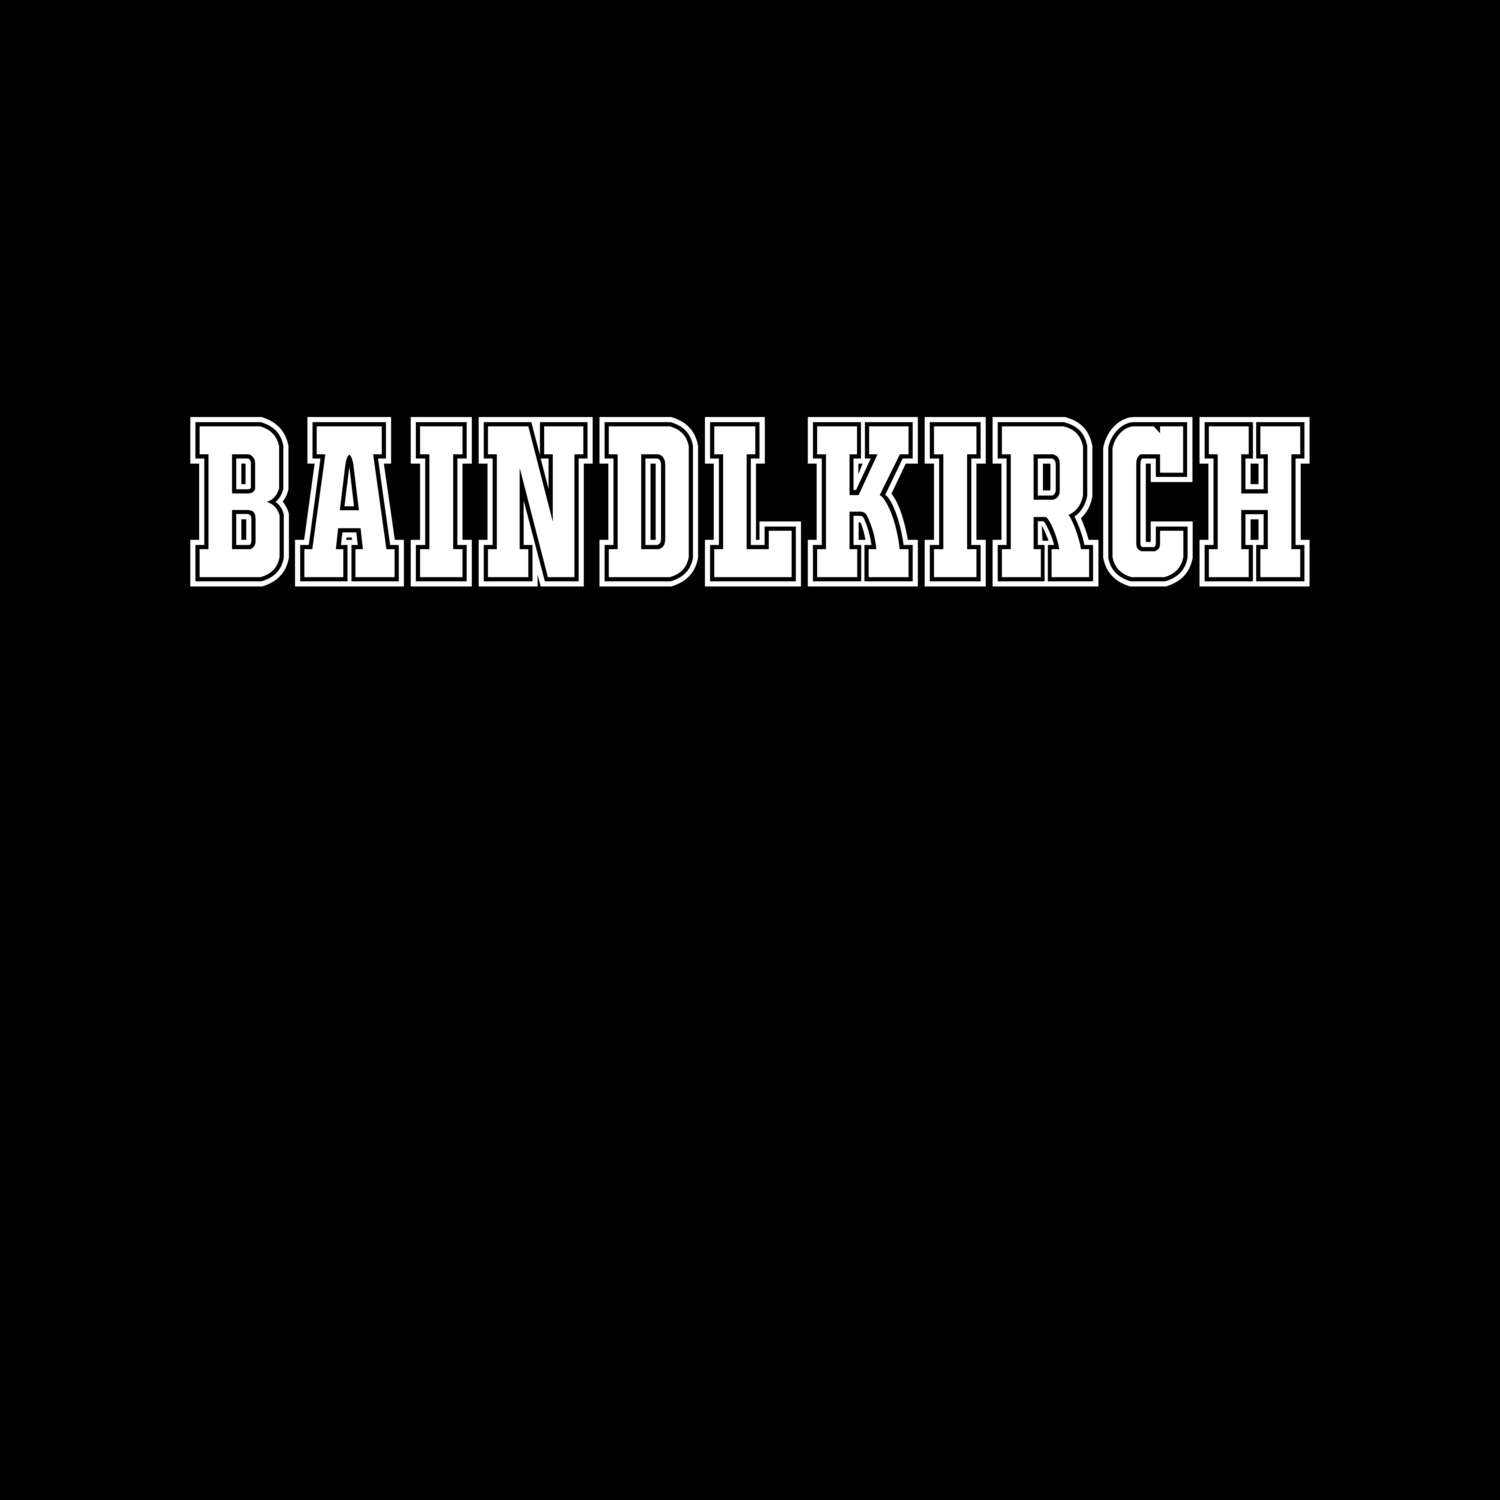 Baindlkirch T-Shirt »Classic«